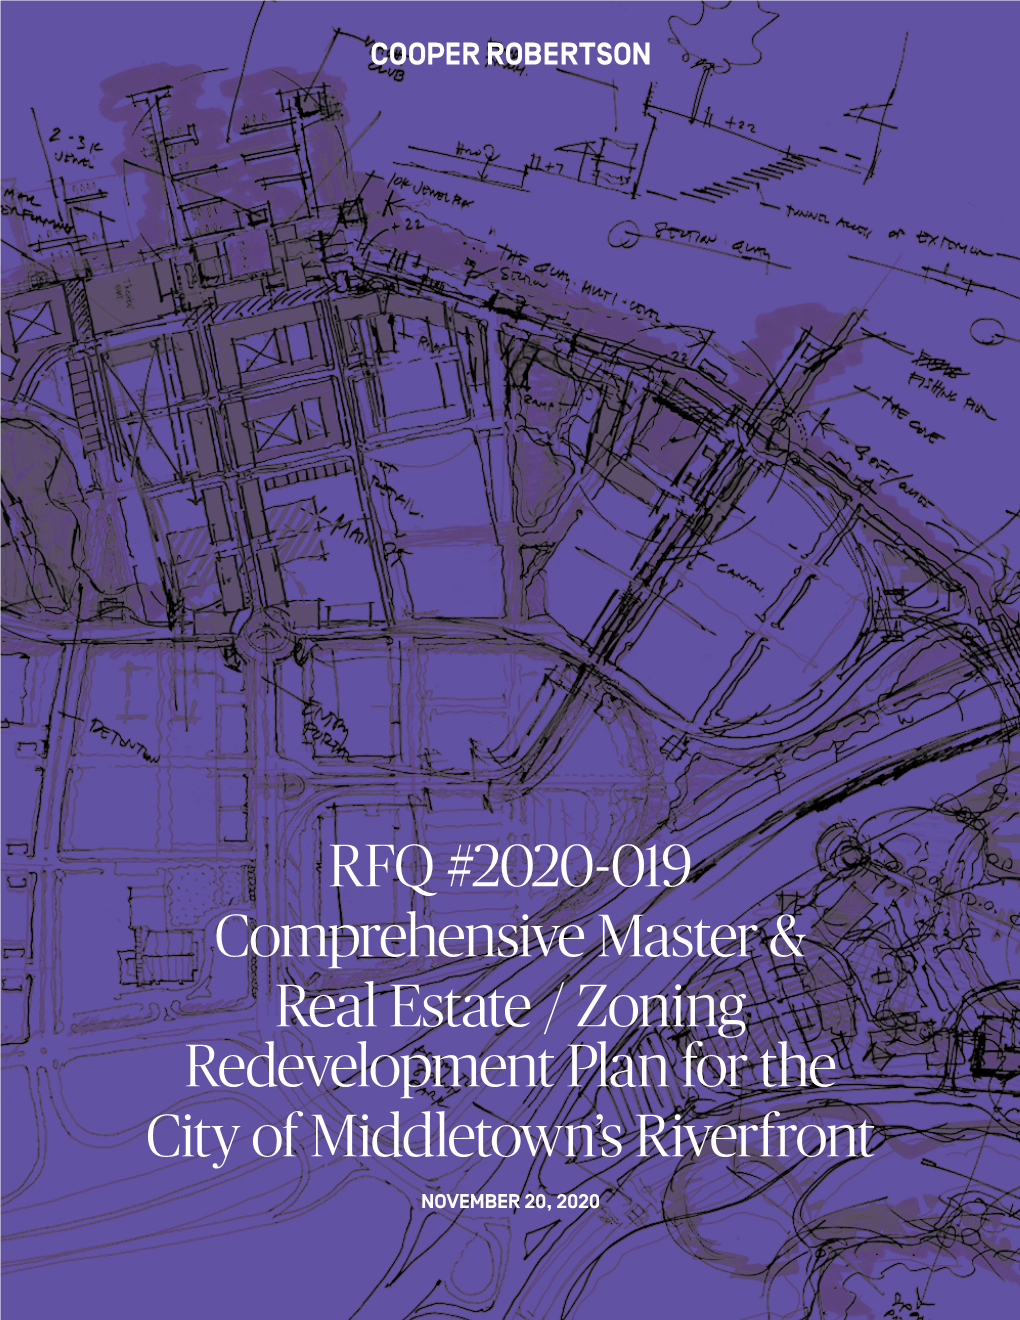 RFQ #2020-019 Comprehensive Master & Real Estate / Zoning